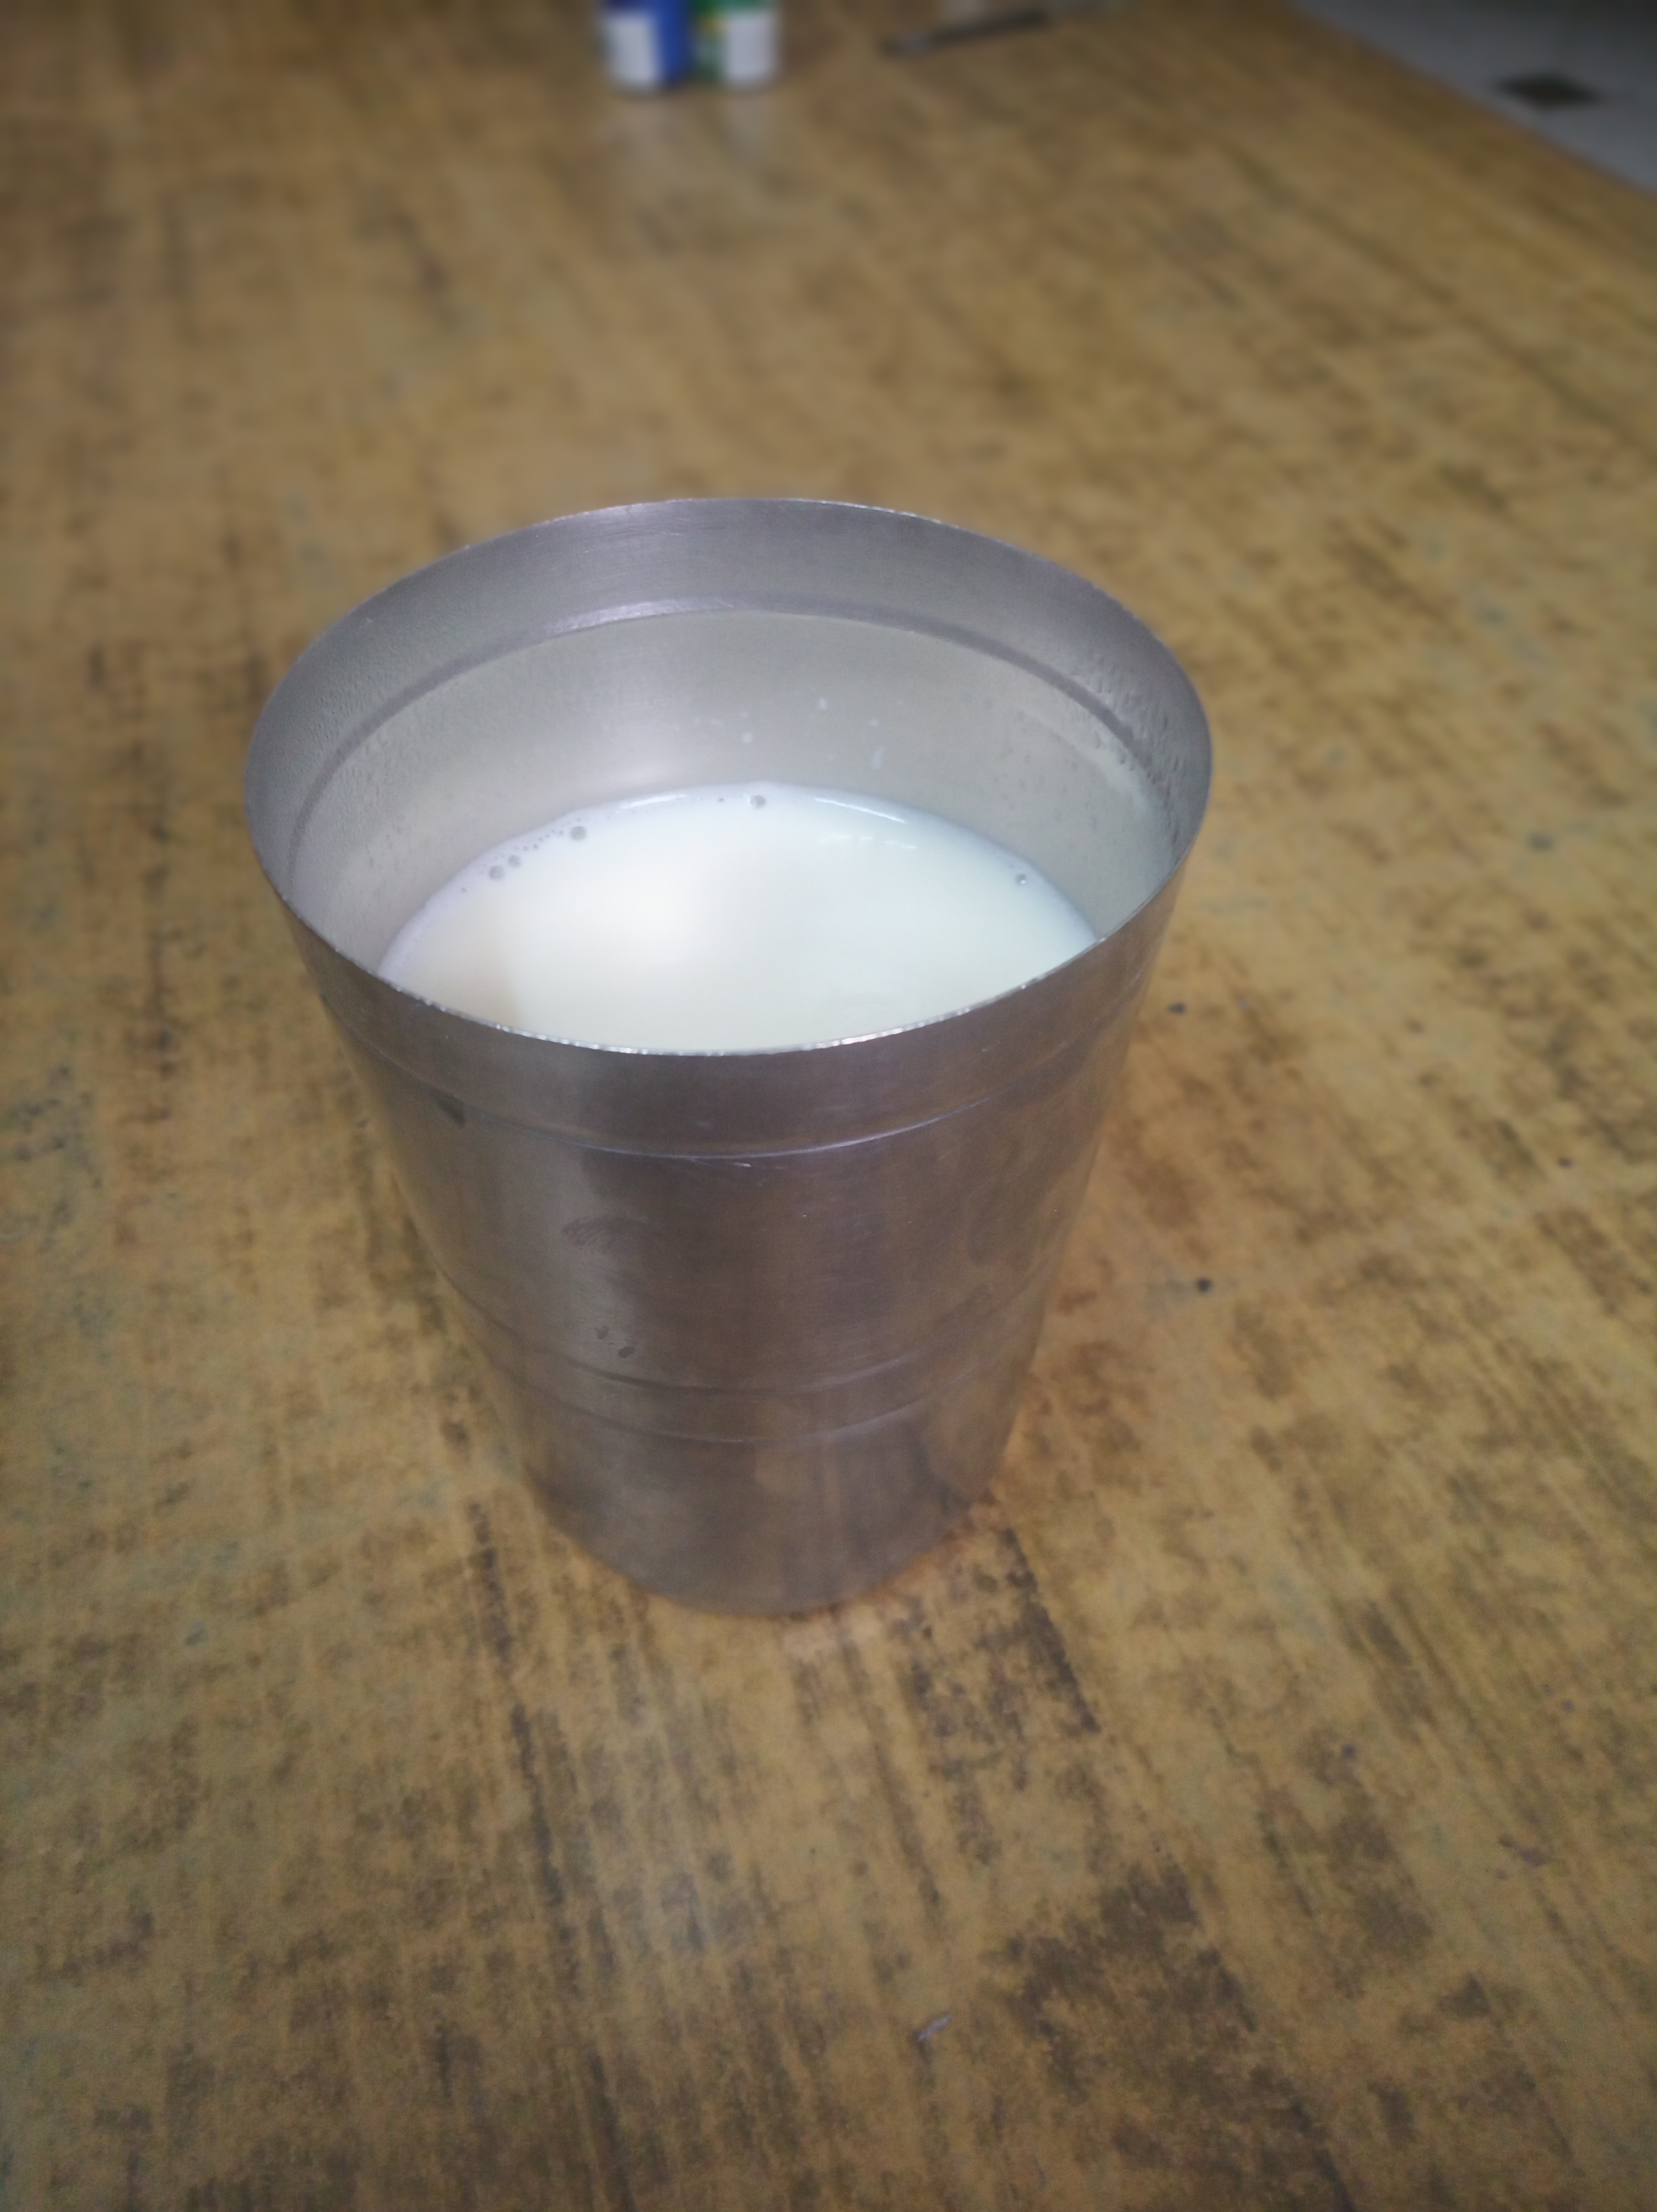 File:Glass of milk.jpg - Wikimedia Commons